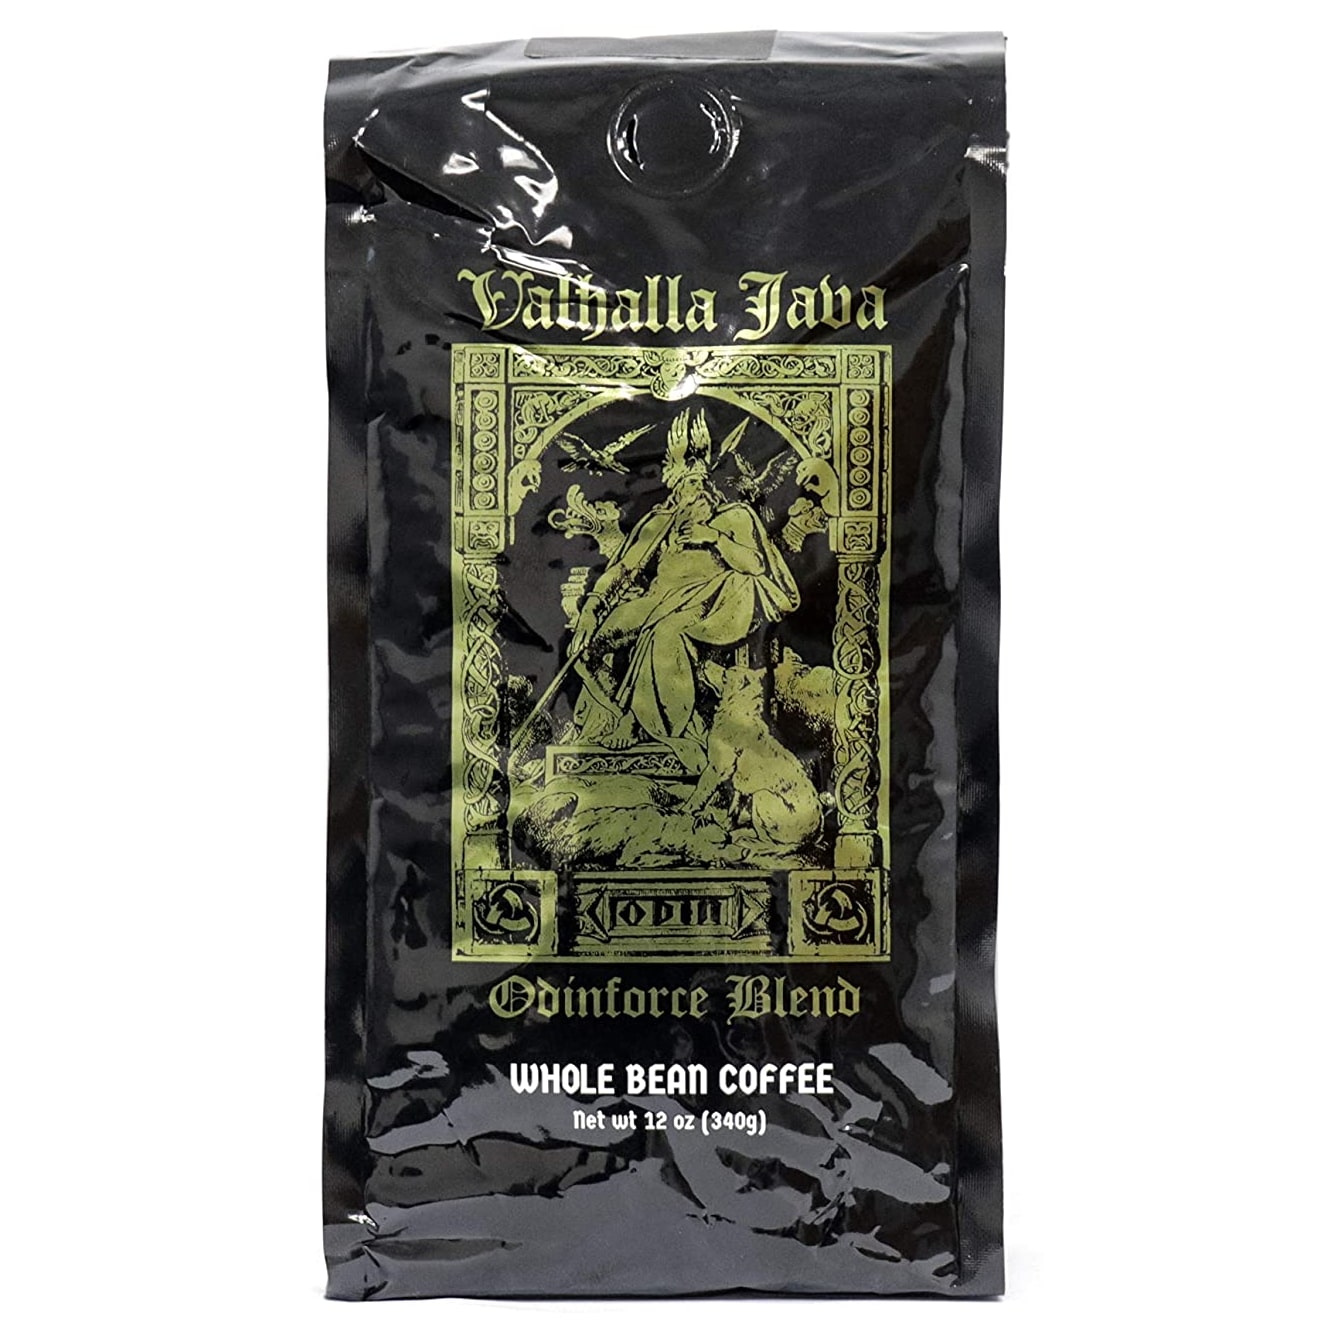 Valhalla Java by Death Wish Coffee Company